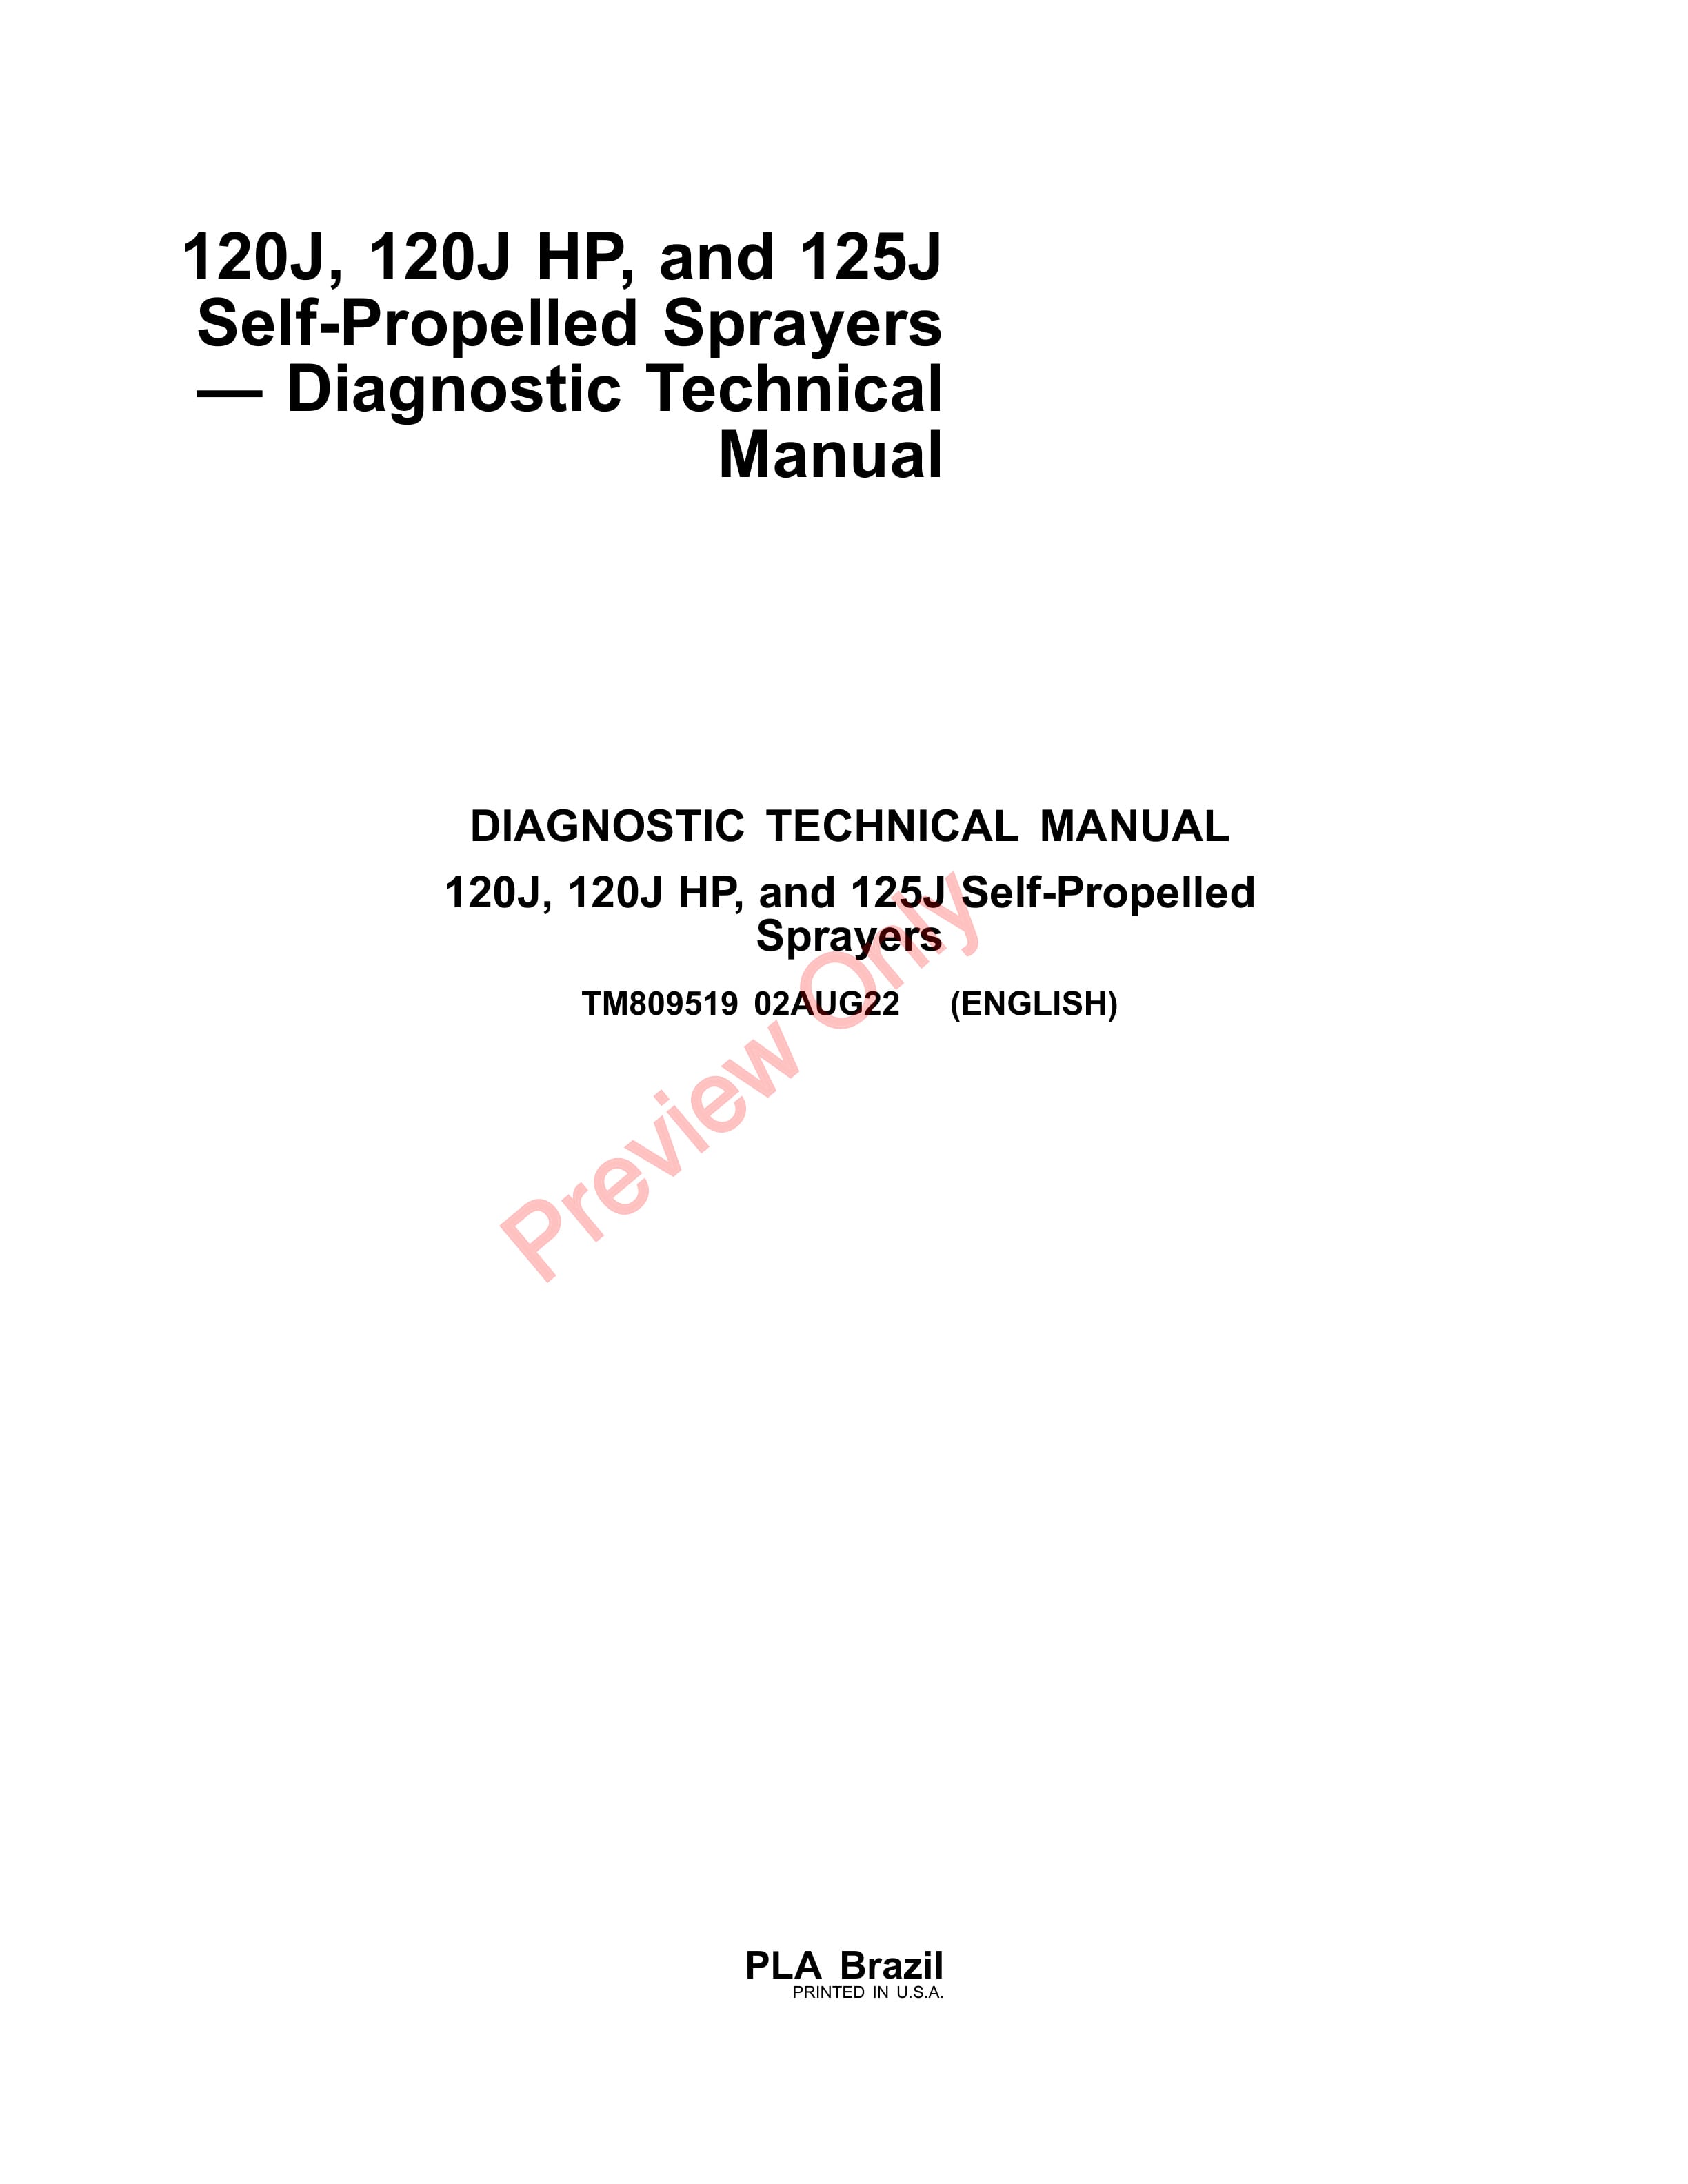 John Deere 120J, 120J HP, and 125J Self-Propelled Sprayers Diagnostic Technical Manual TM809519 02AUG22-1